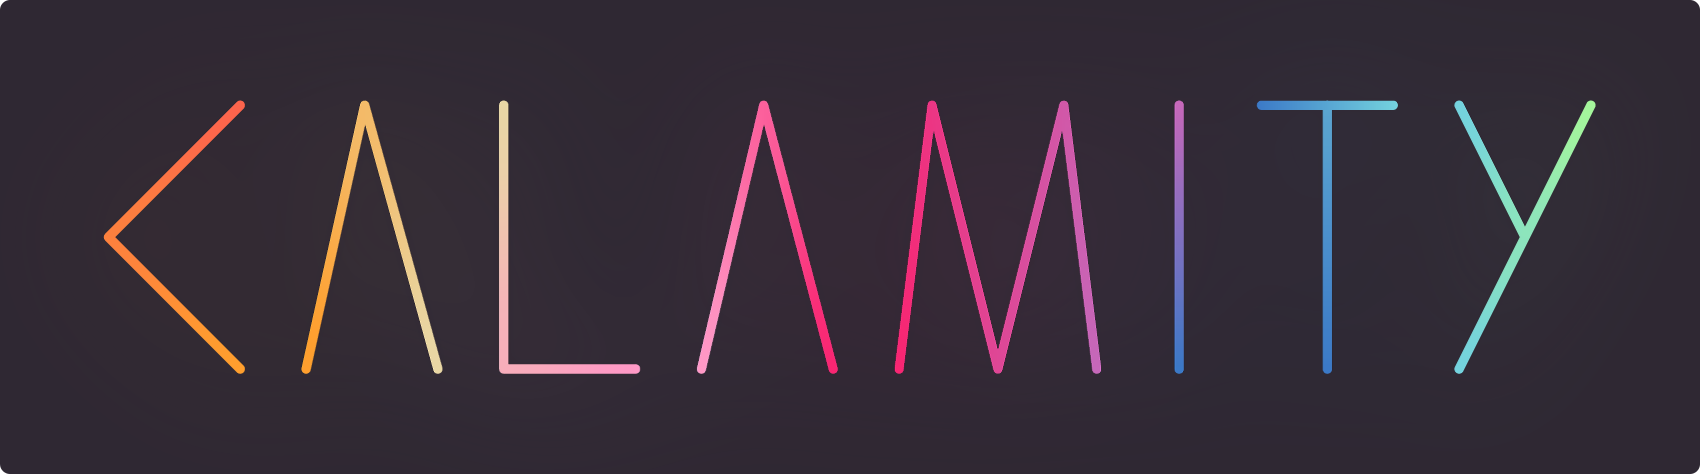 calamity-logotype